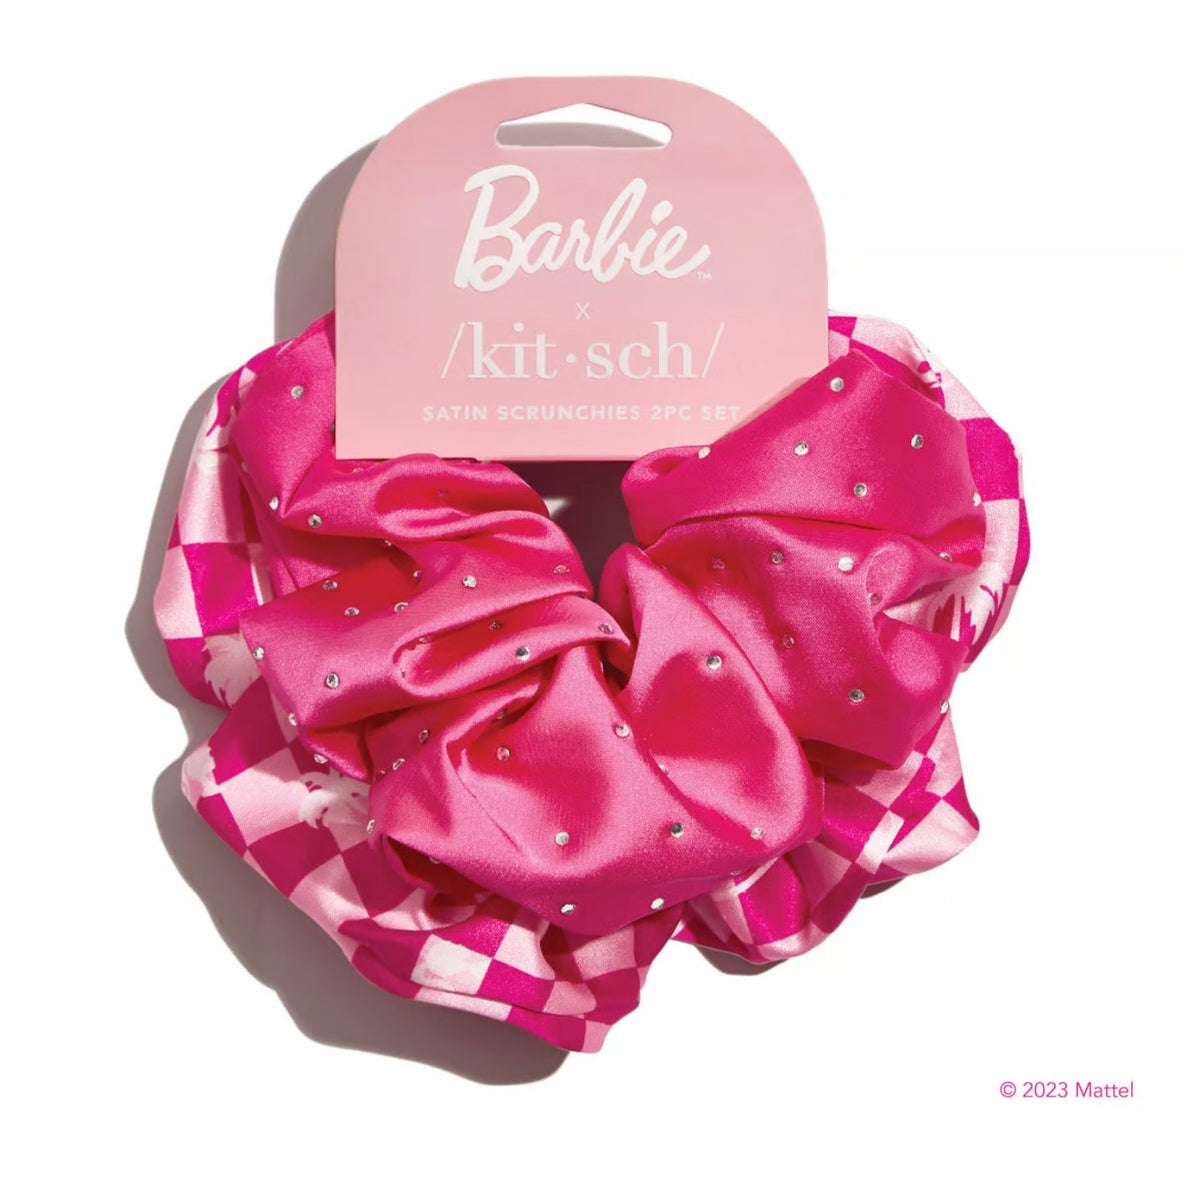 Barbie x Kitsch Satin Scrunchies